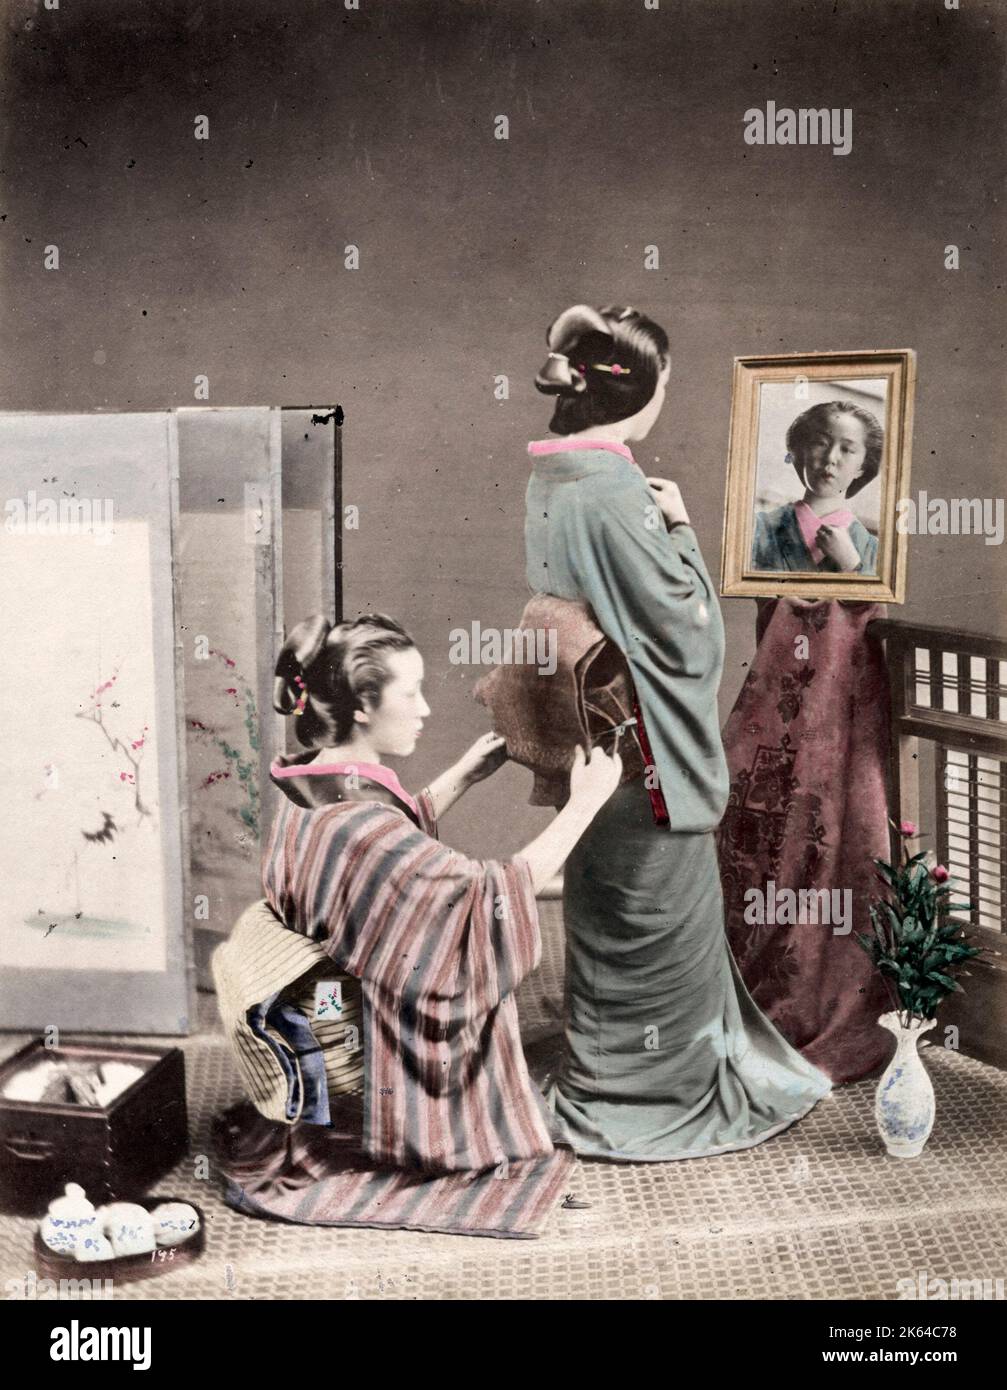 Late 19th century vintage photograph: Geisha having her obi sash tied, Japan Stock Photo